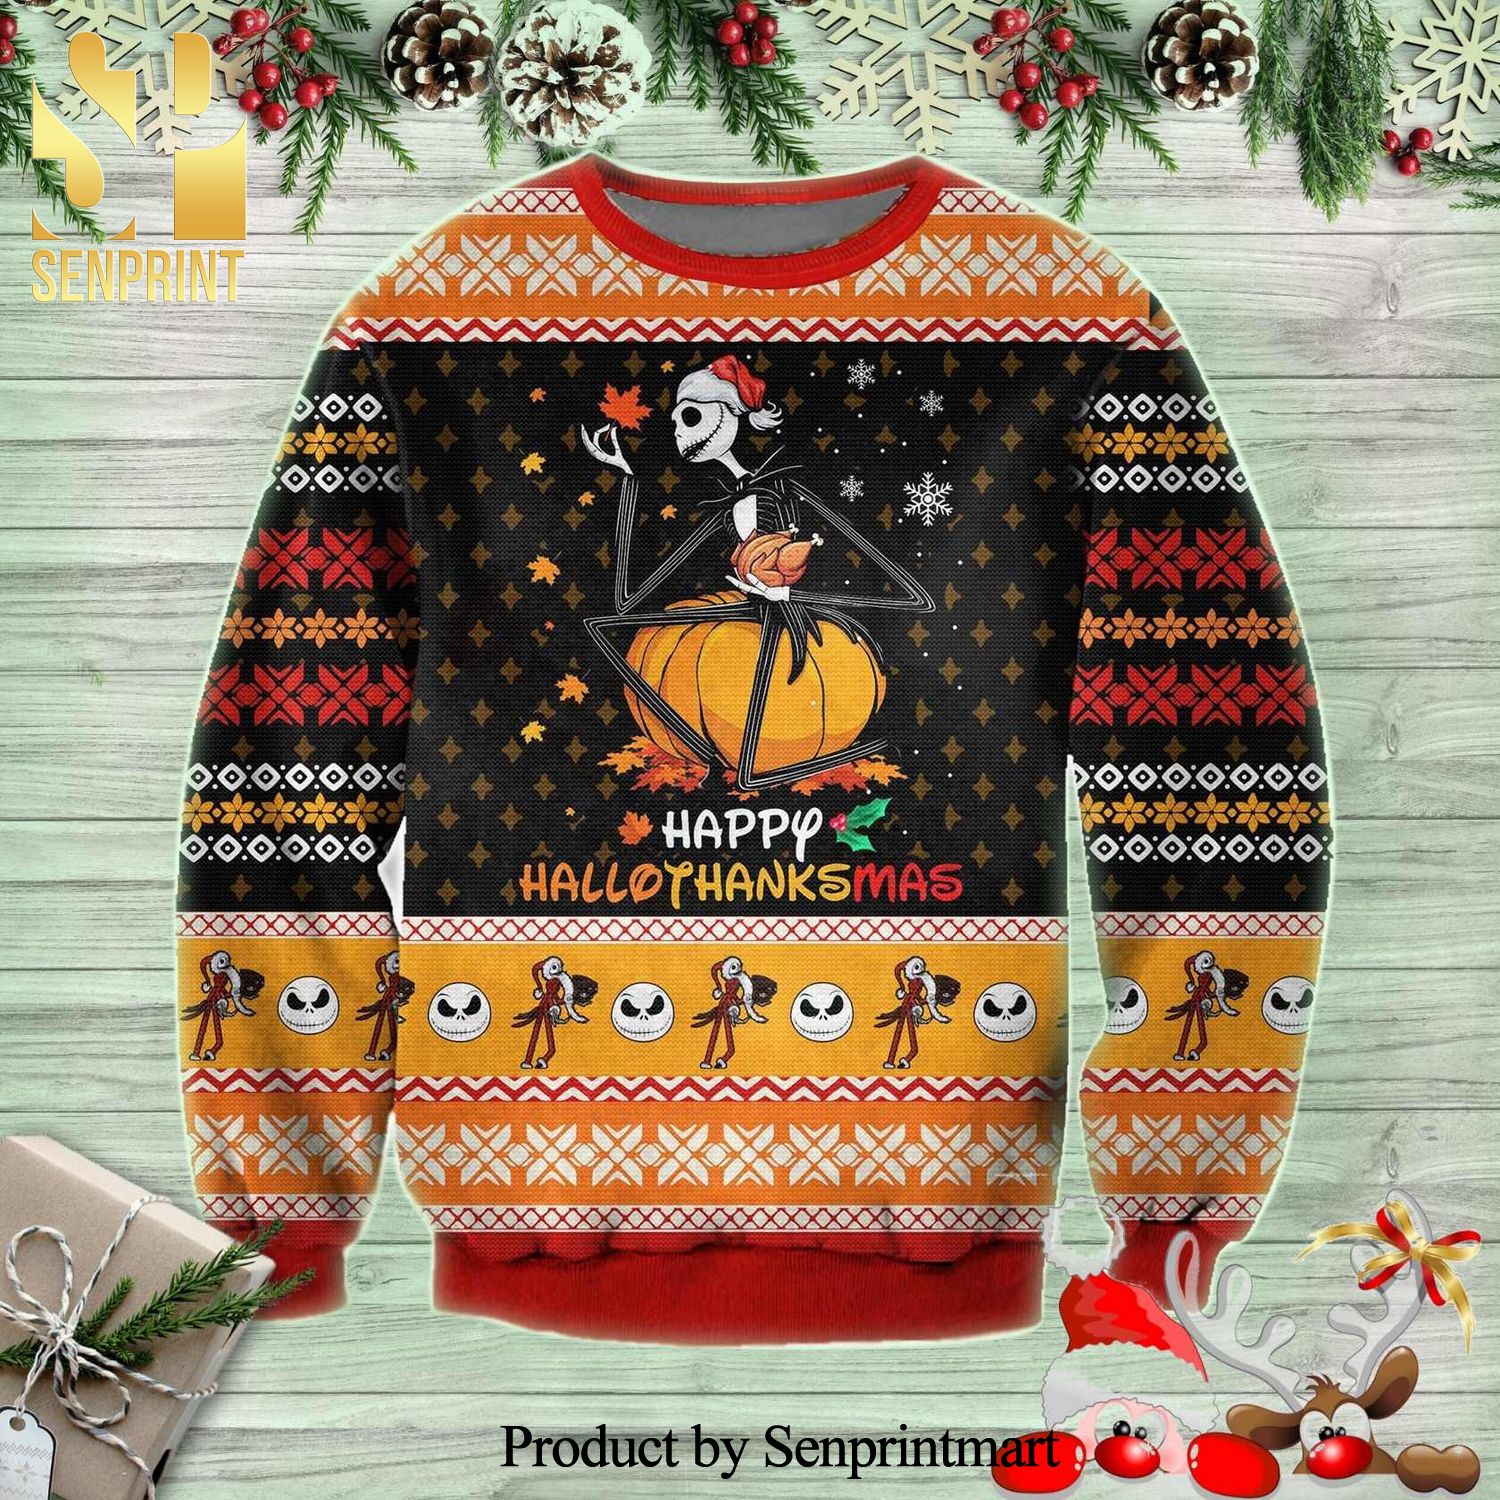 Happy Hallothanksmas Jack Skellington Knitted Ugly Christmas Sweater